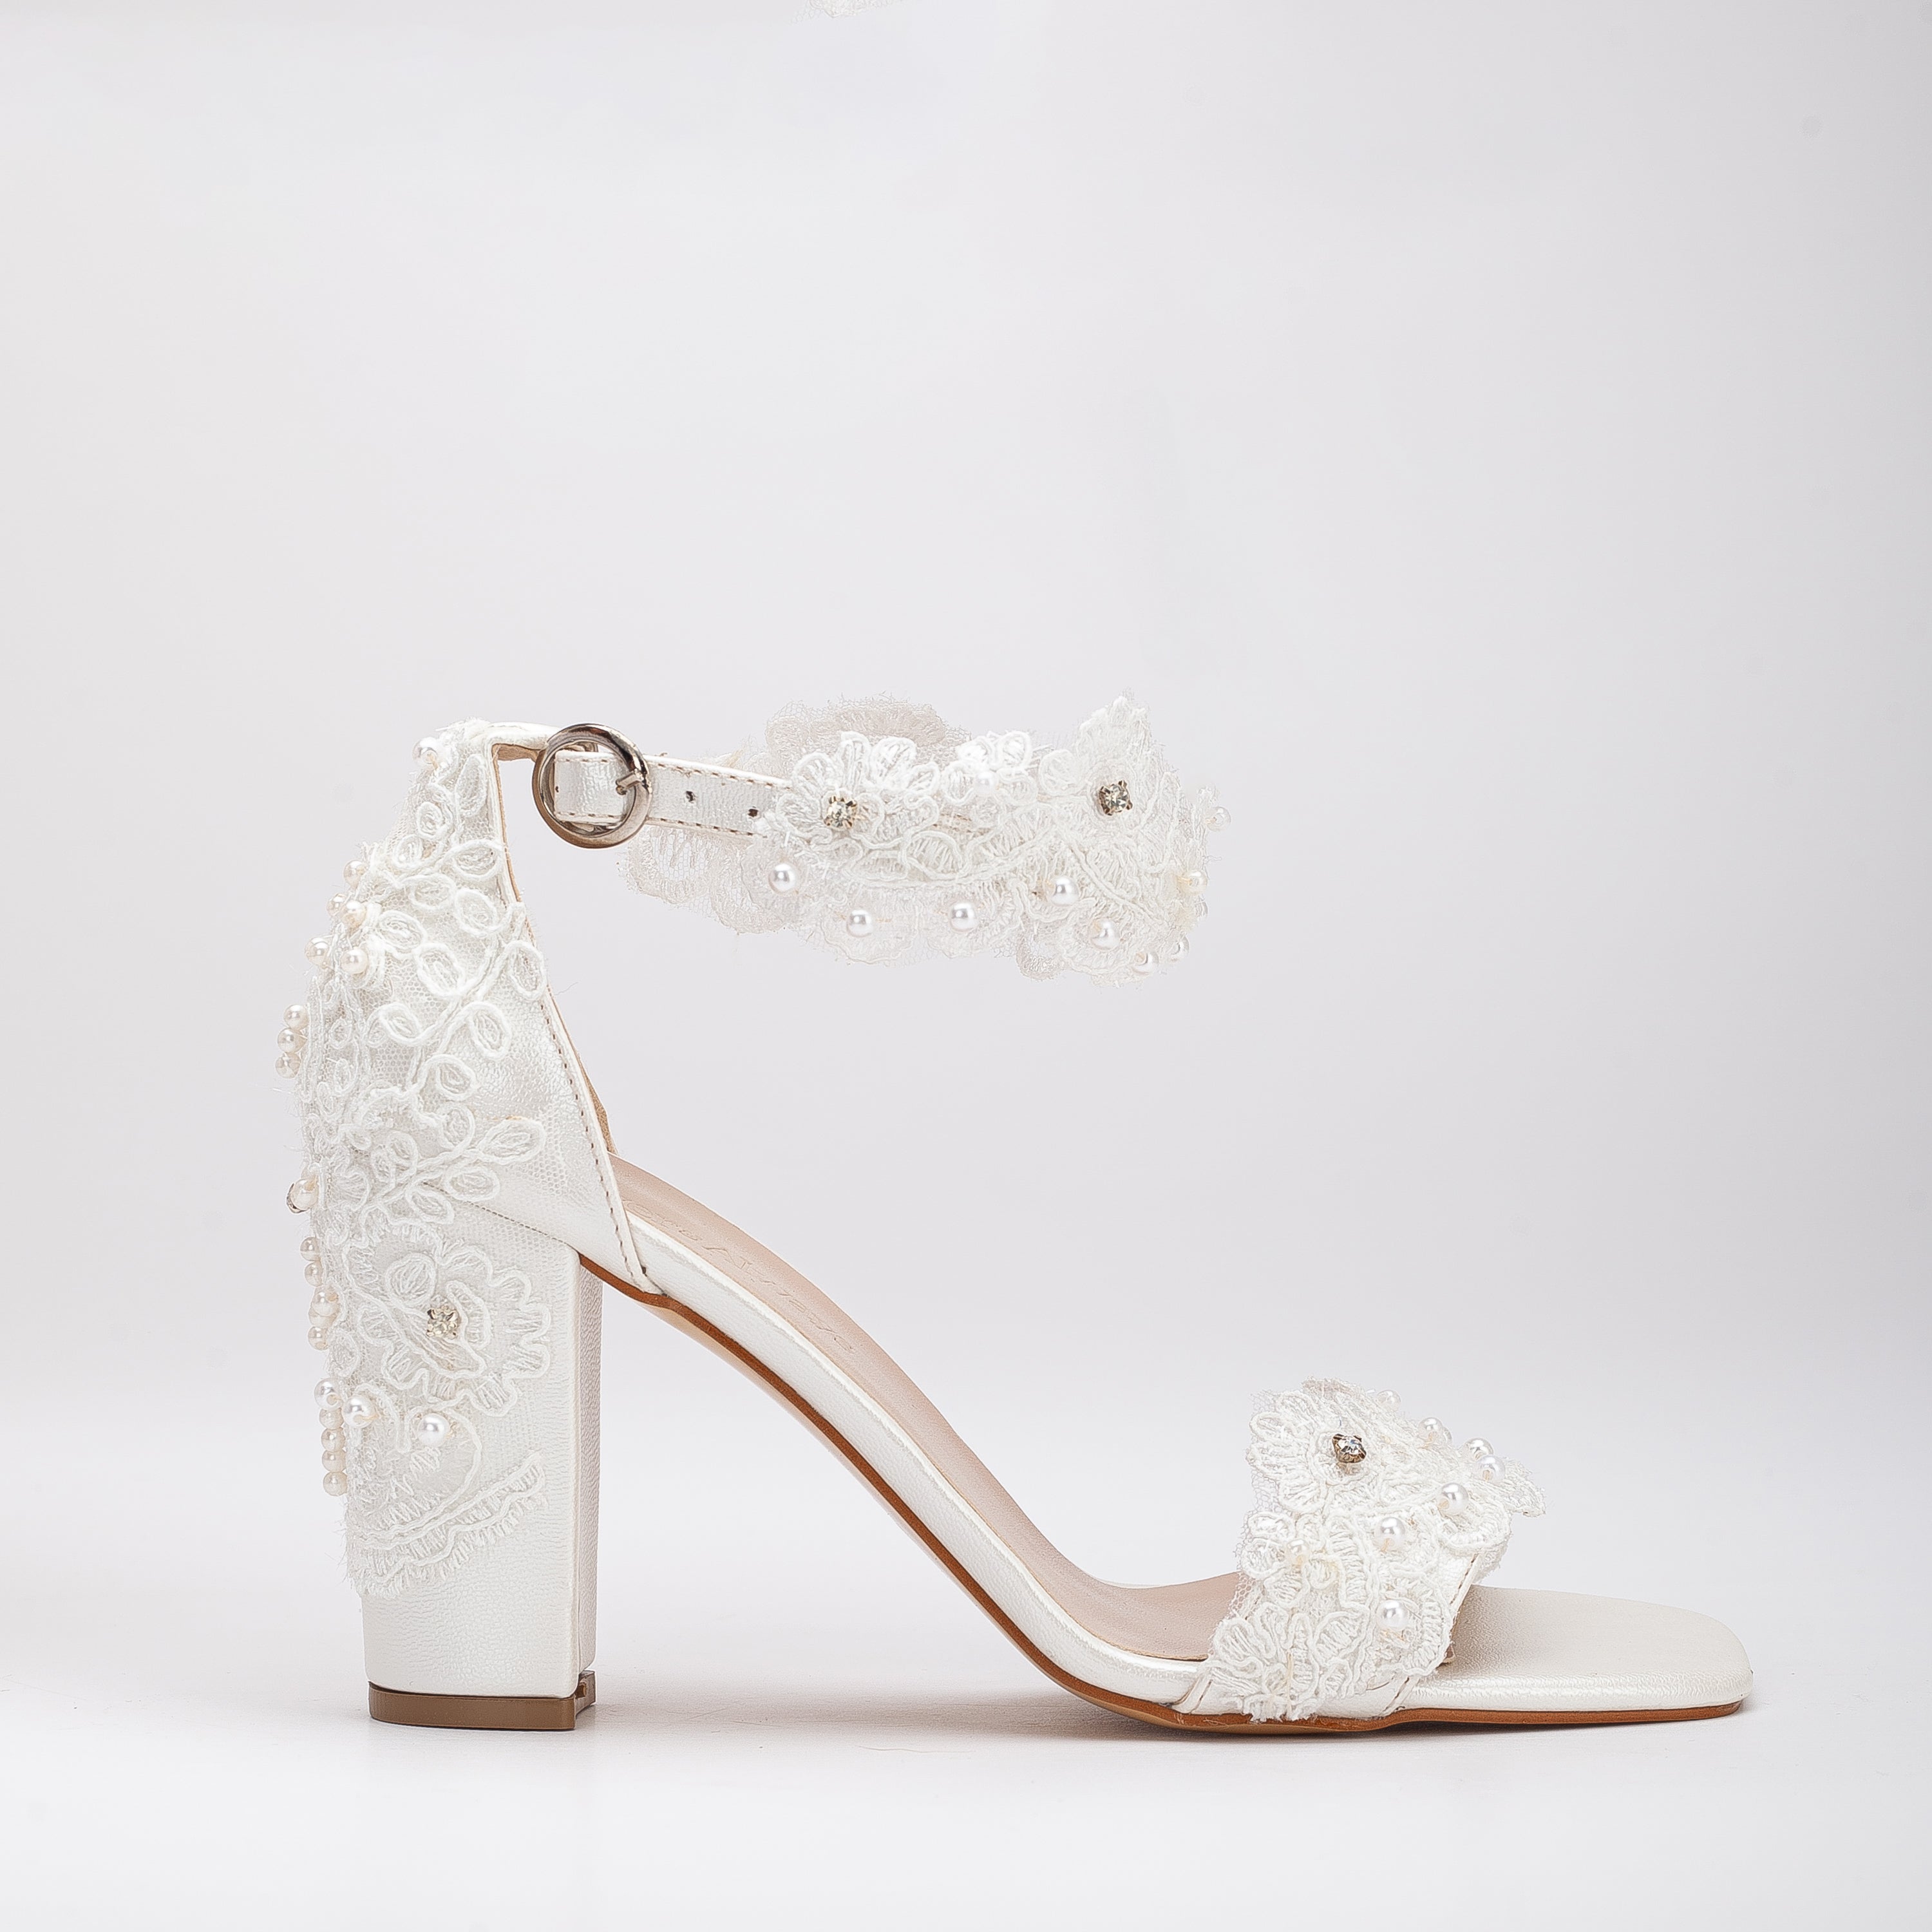 Ivory Wedding Shoes, Bridal Shoes, Block Heels, Lace Wedding Shoes, Ivory Heels, White Bride Shoes, Wedding Shoes, Ivory Lace High Heels